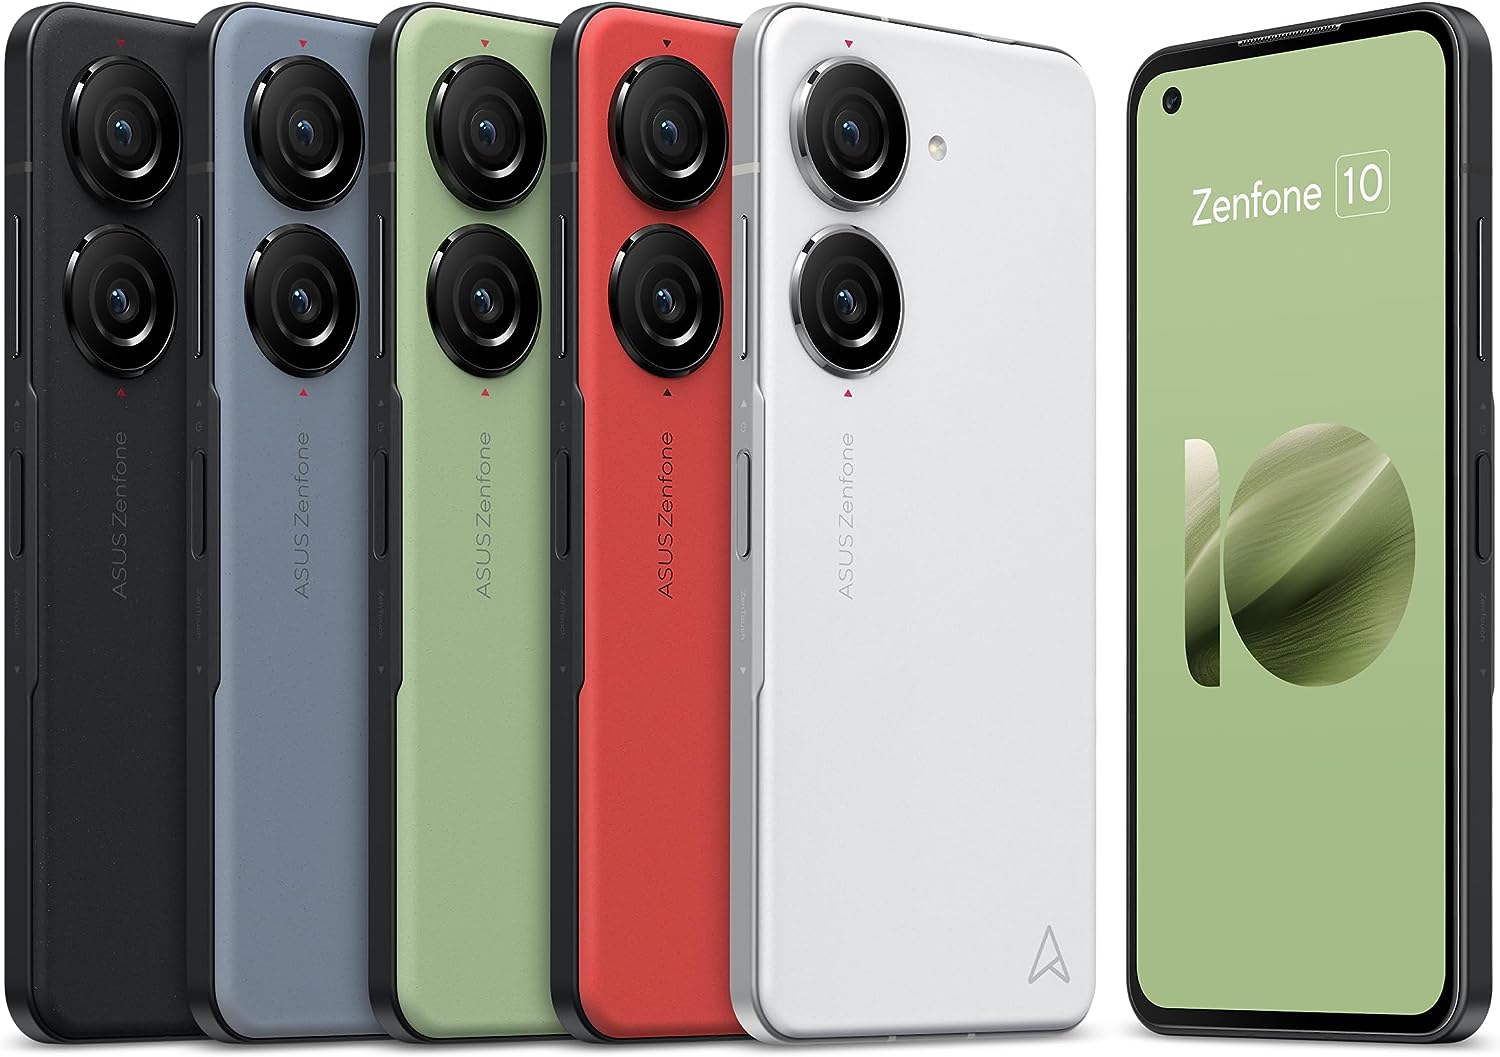 Asus Zenfone 10, Dual SIM, 256GB ROM + 8GB RAM (GSM Only, No CDMA) Factory Unlocked, 5G, Smartphone (White) - International Version